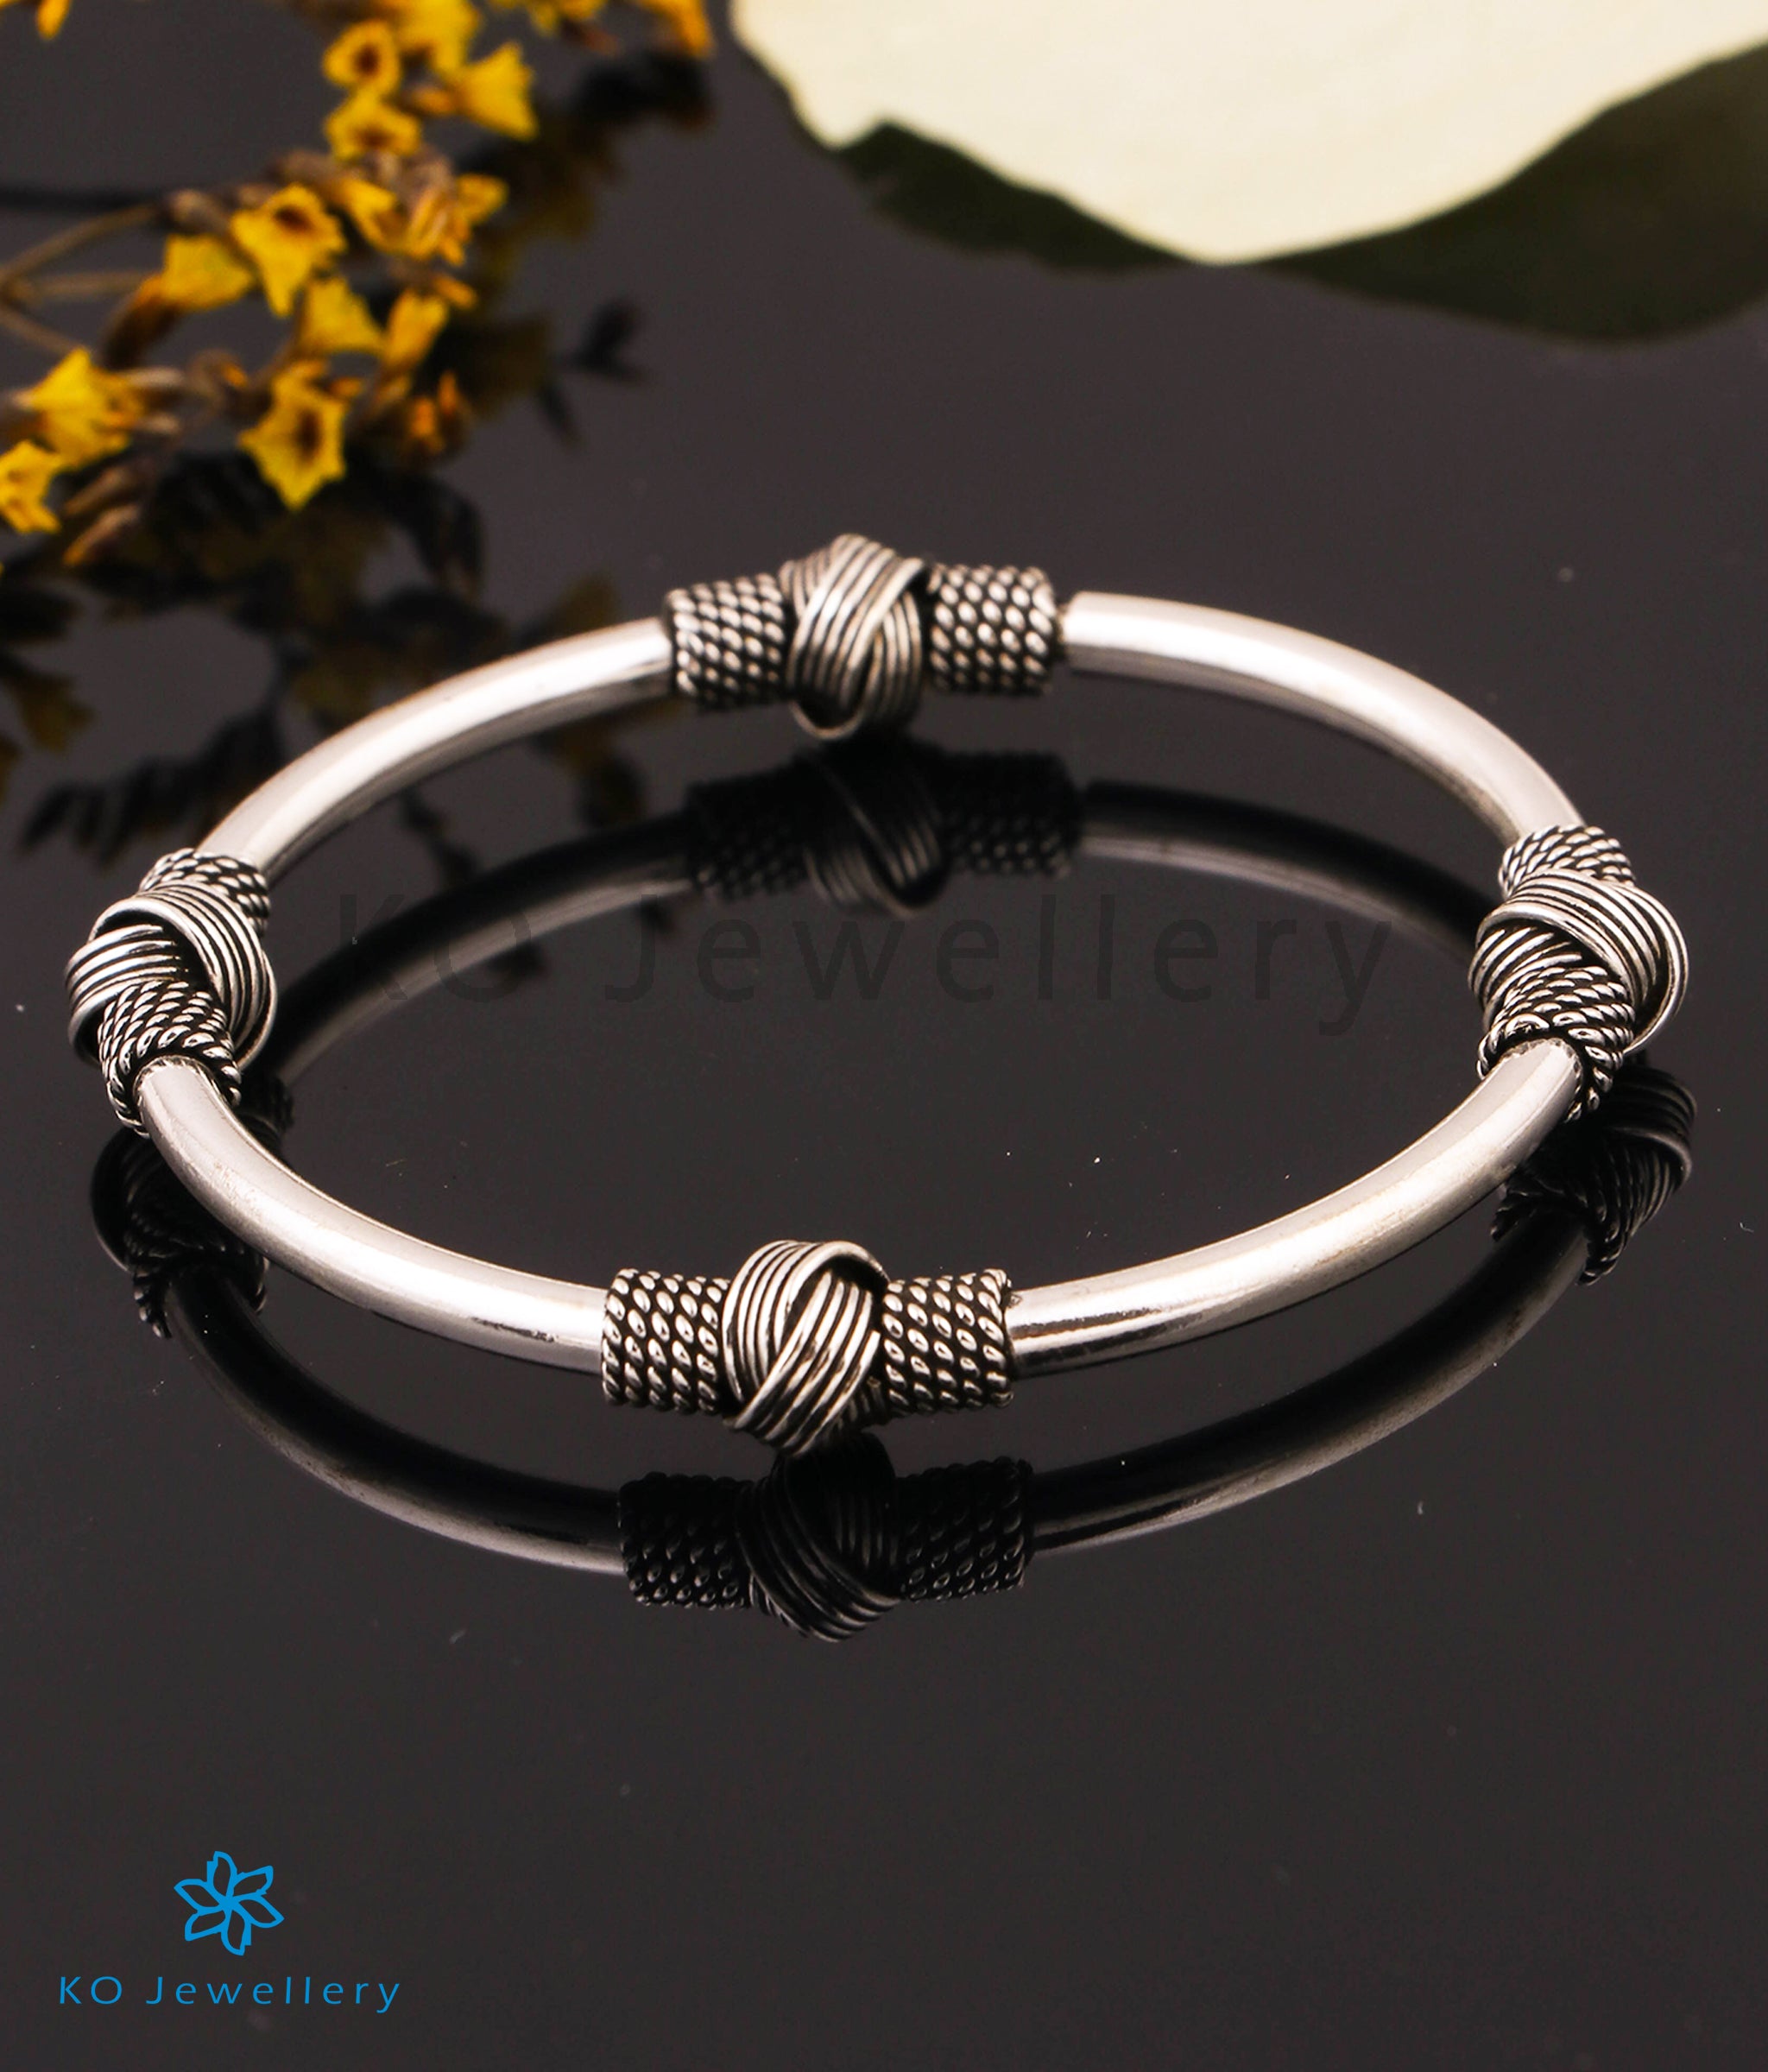 New Simple Design 925 Sterling Silver Cuff Bracelet Men's Bangle Silver  Bracelet | eBay